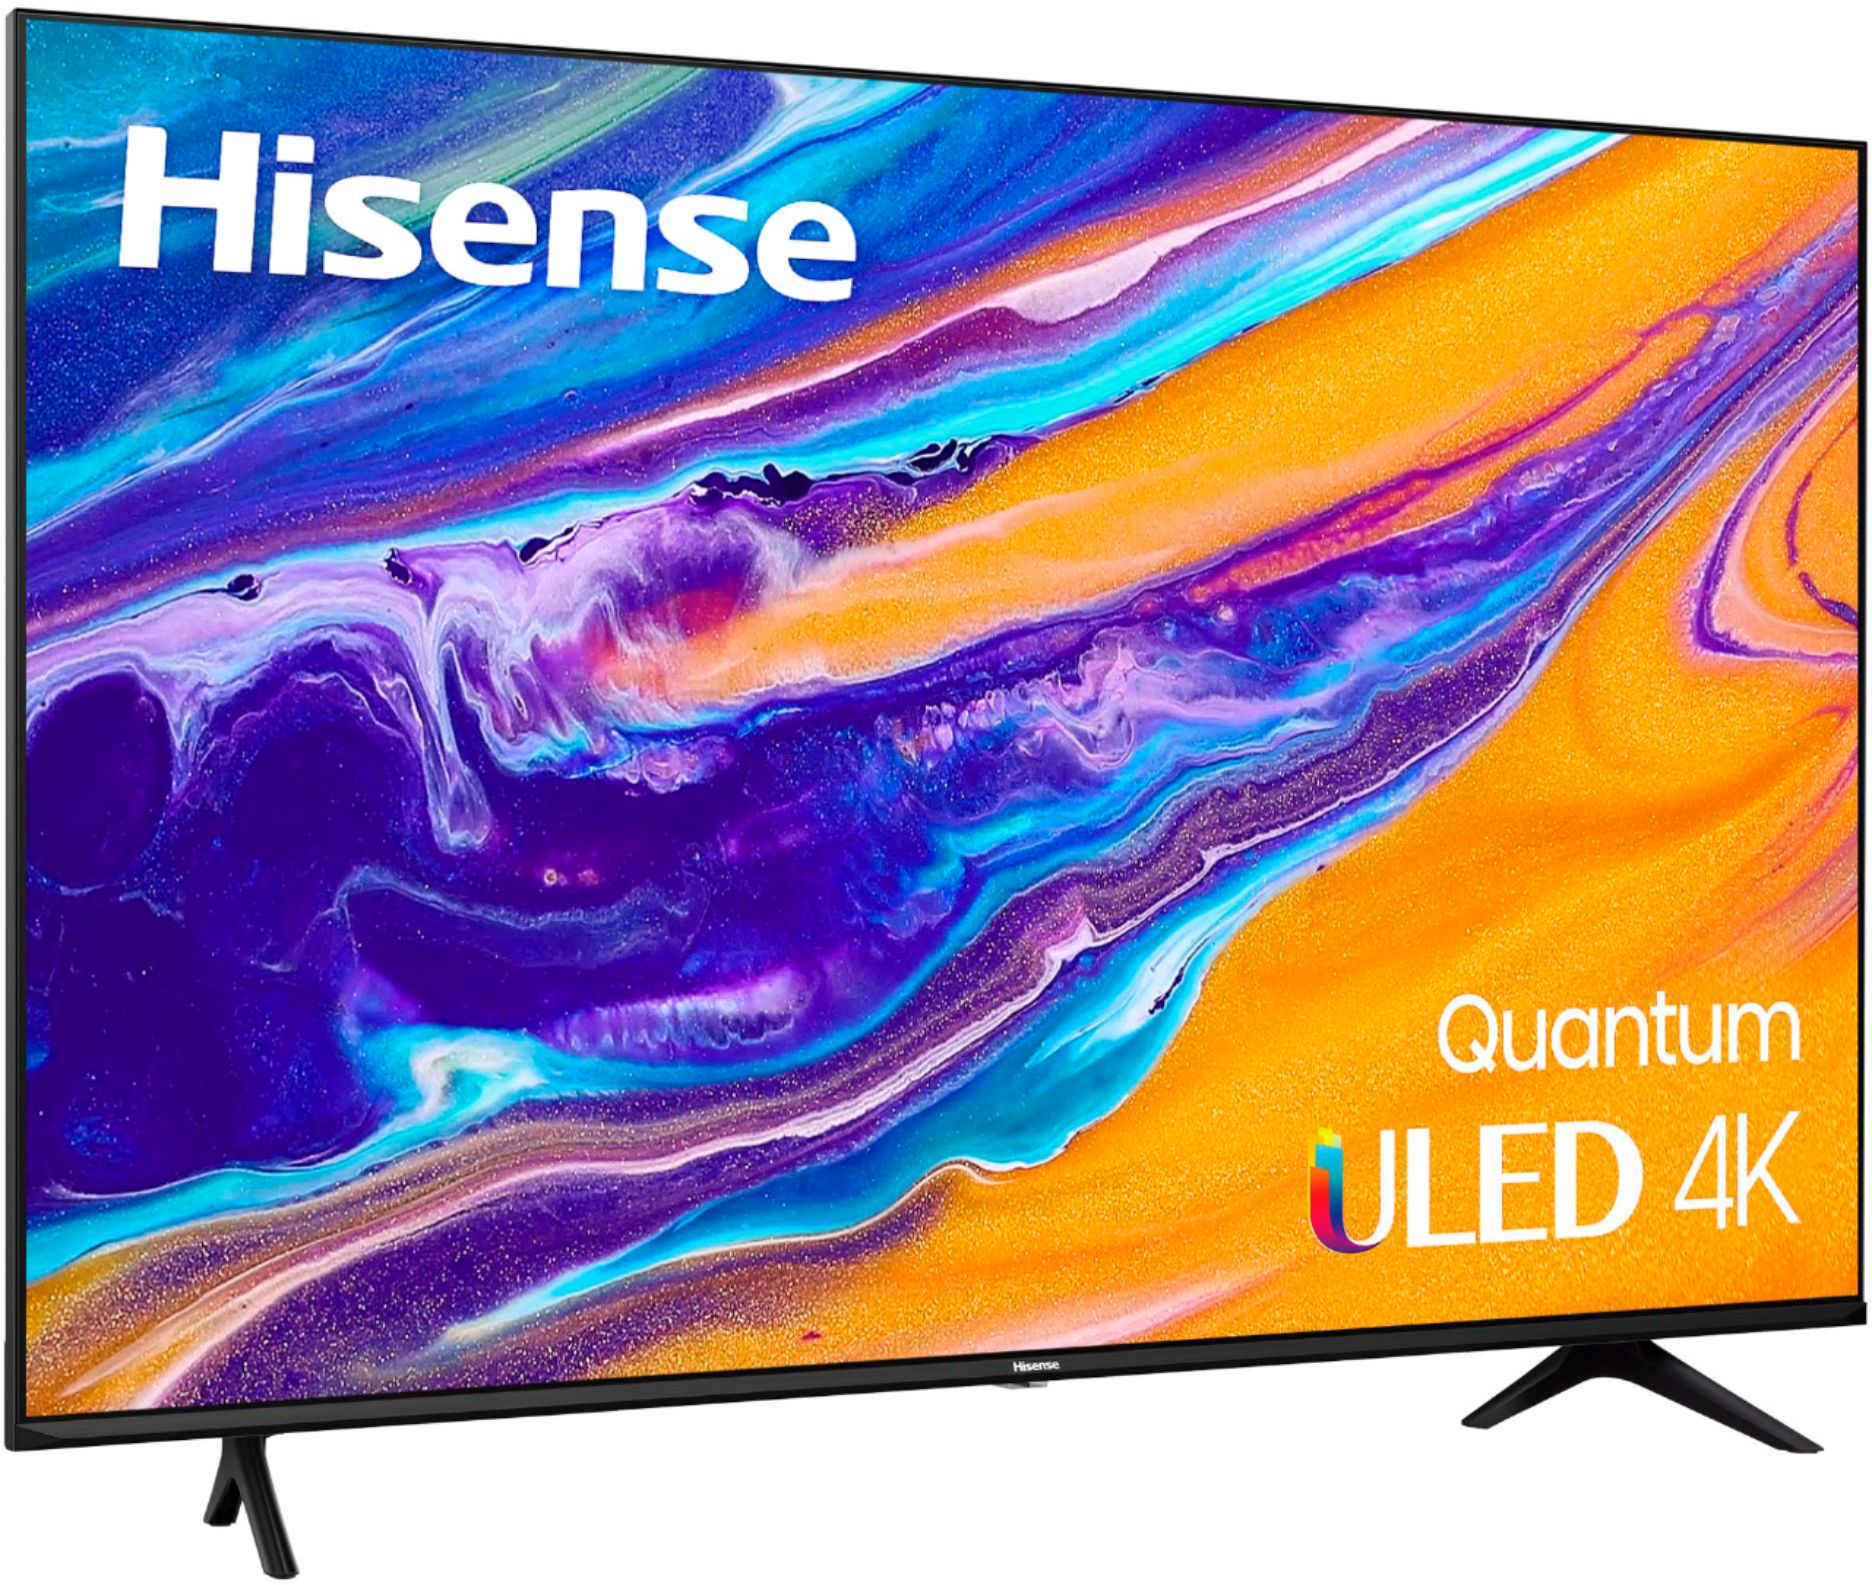 Hisense 65" U6G Series Quantum ULED 4K Android TV @ Best Buy $599.99